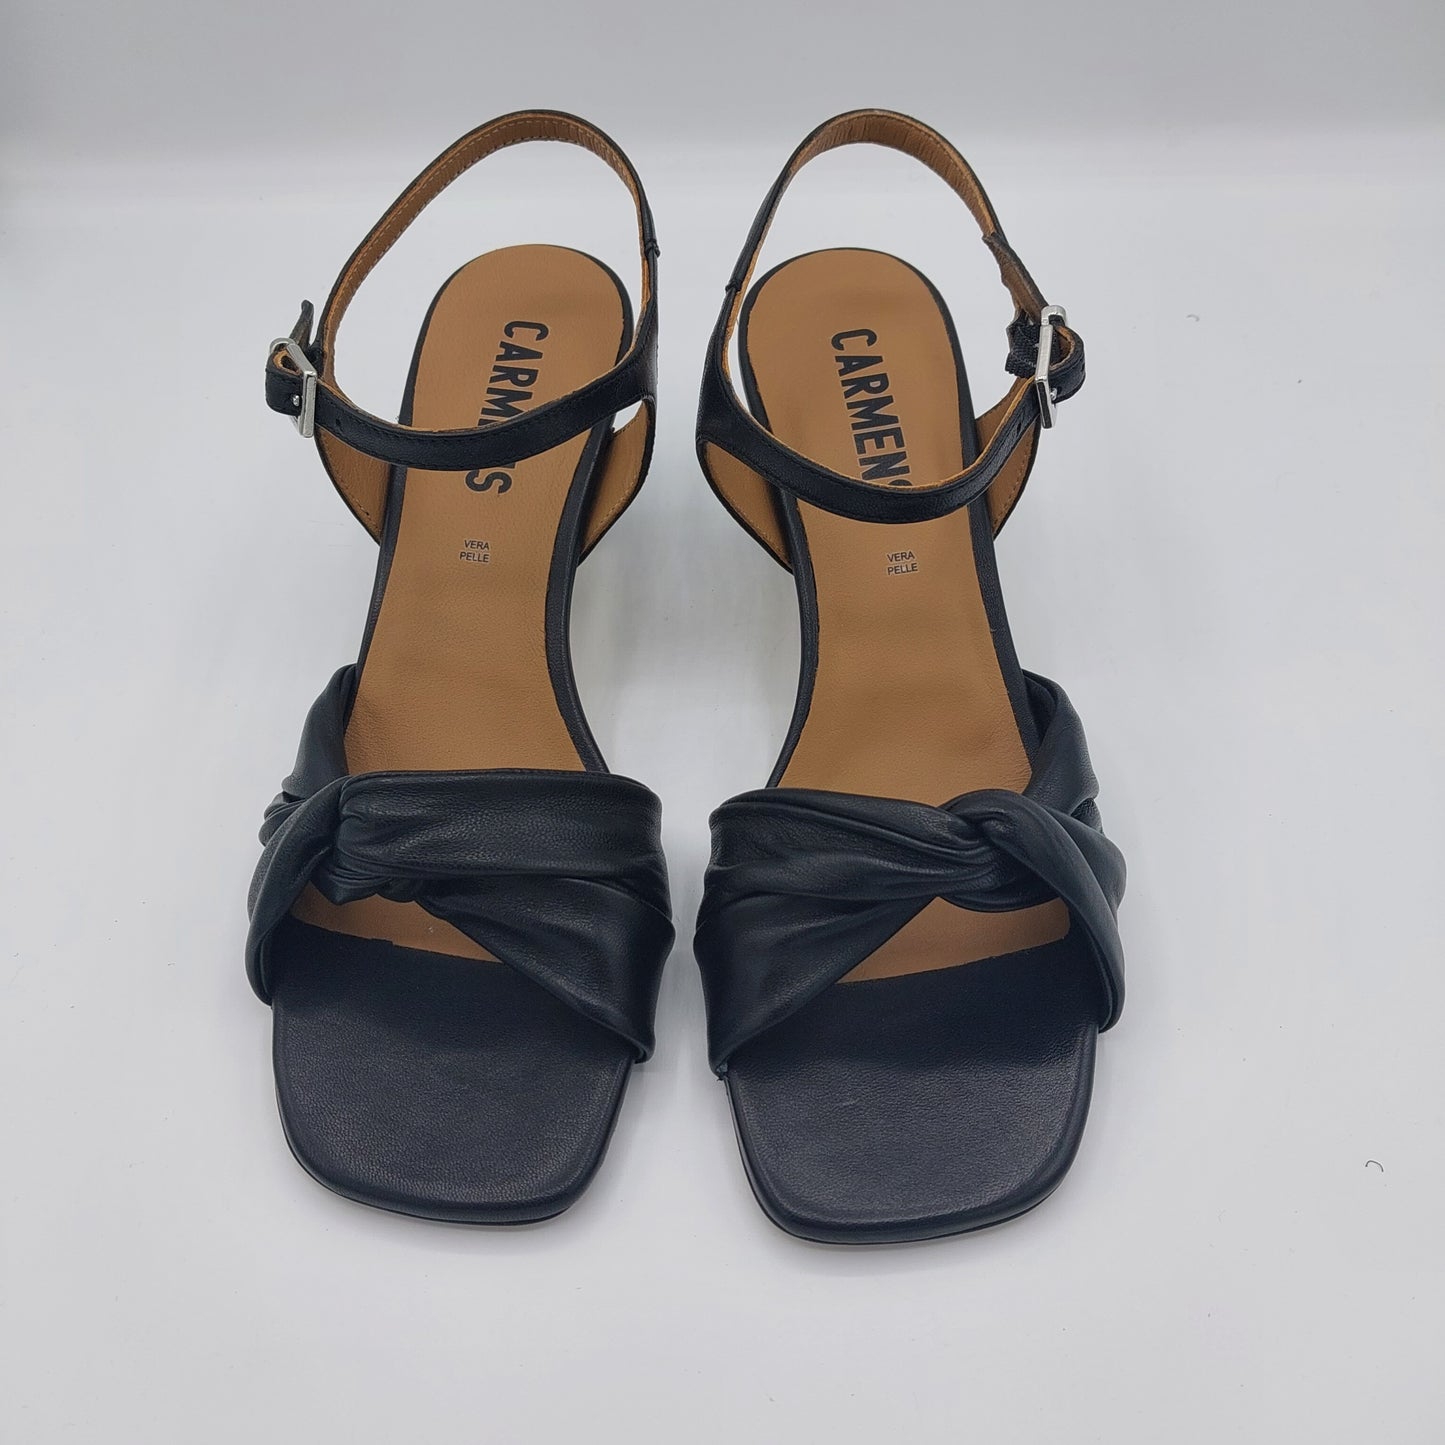 Carmens sandal in black leather